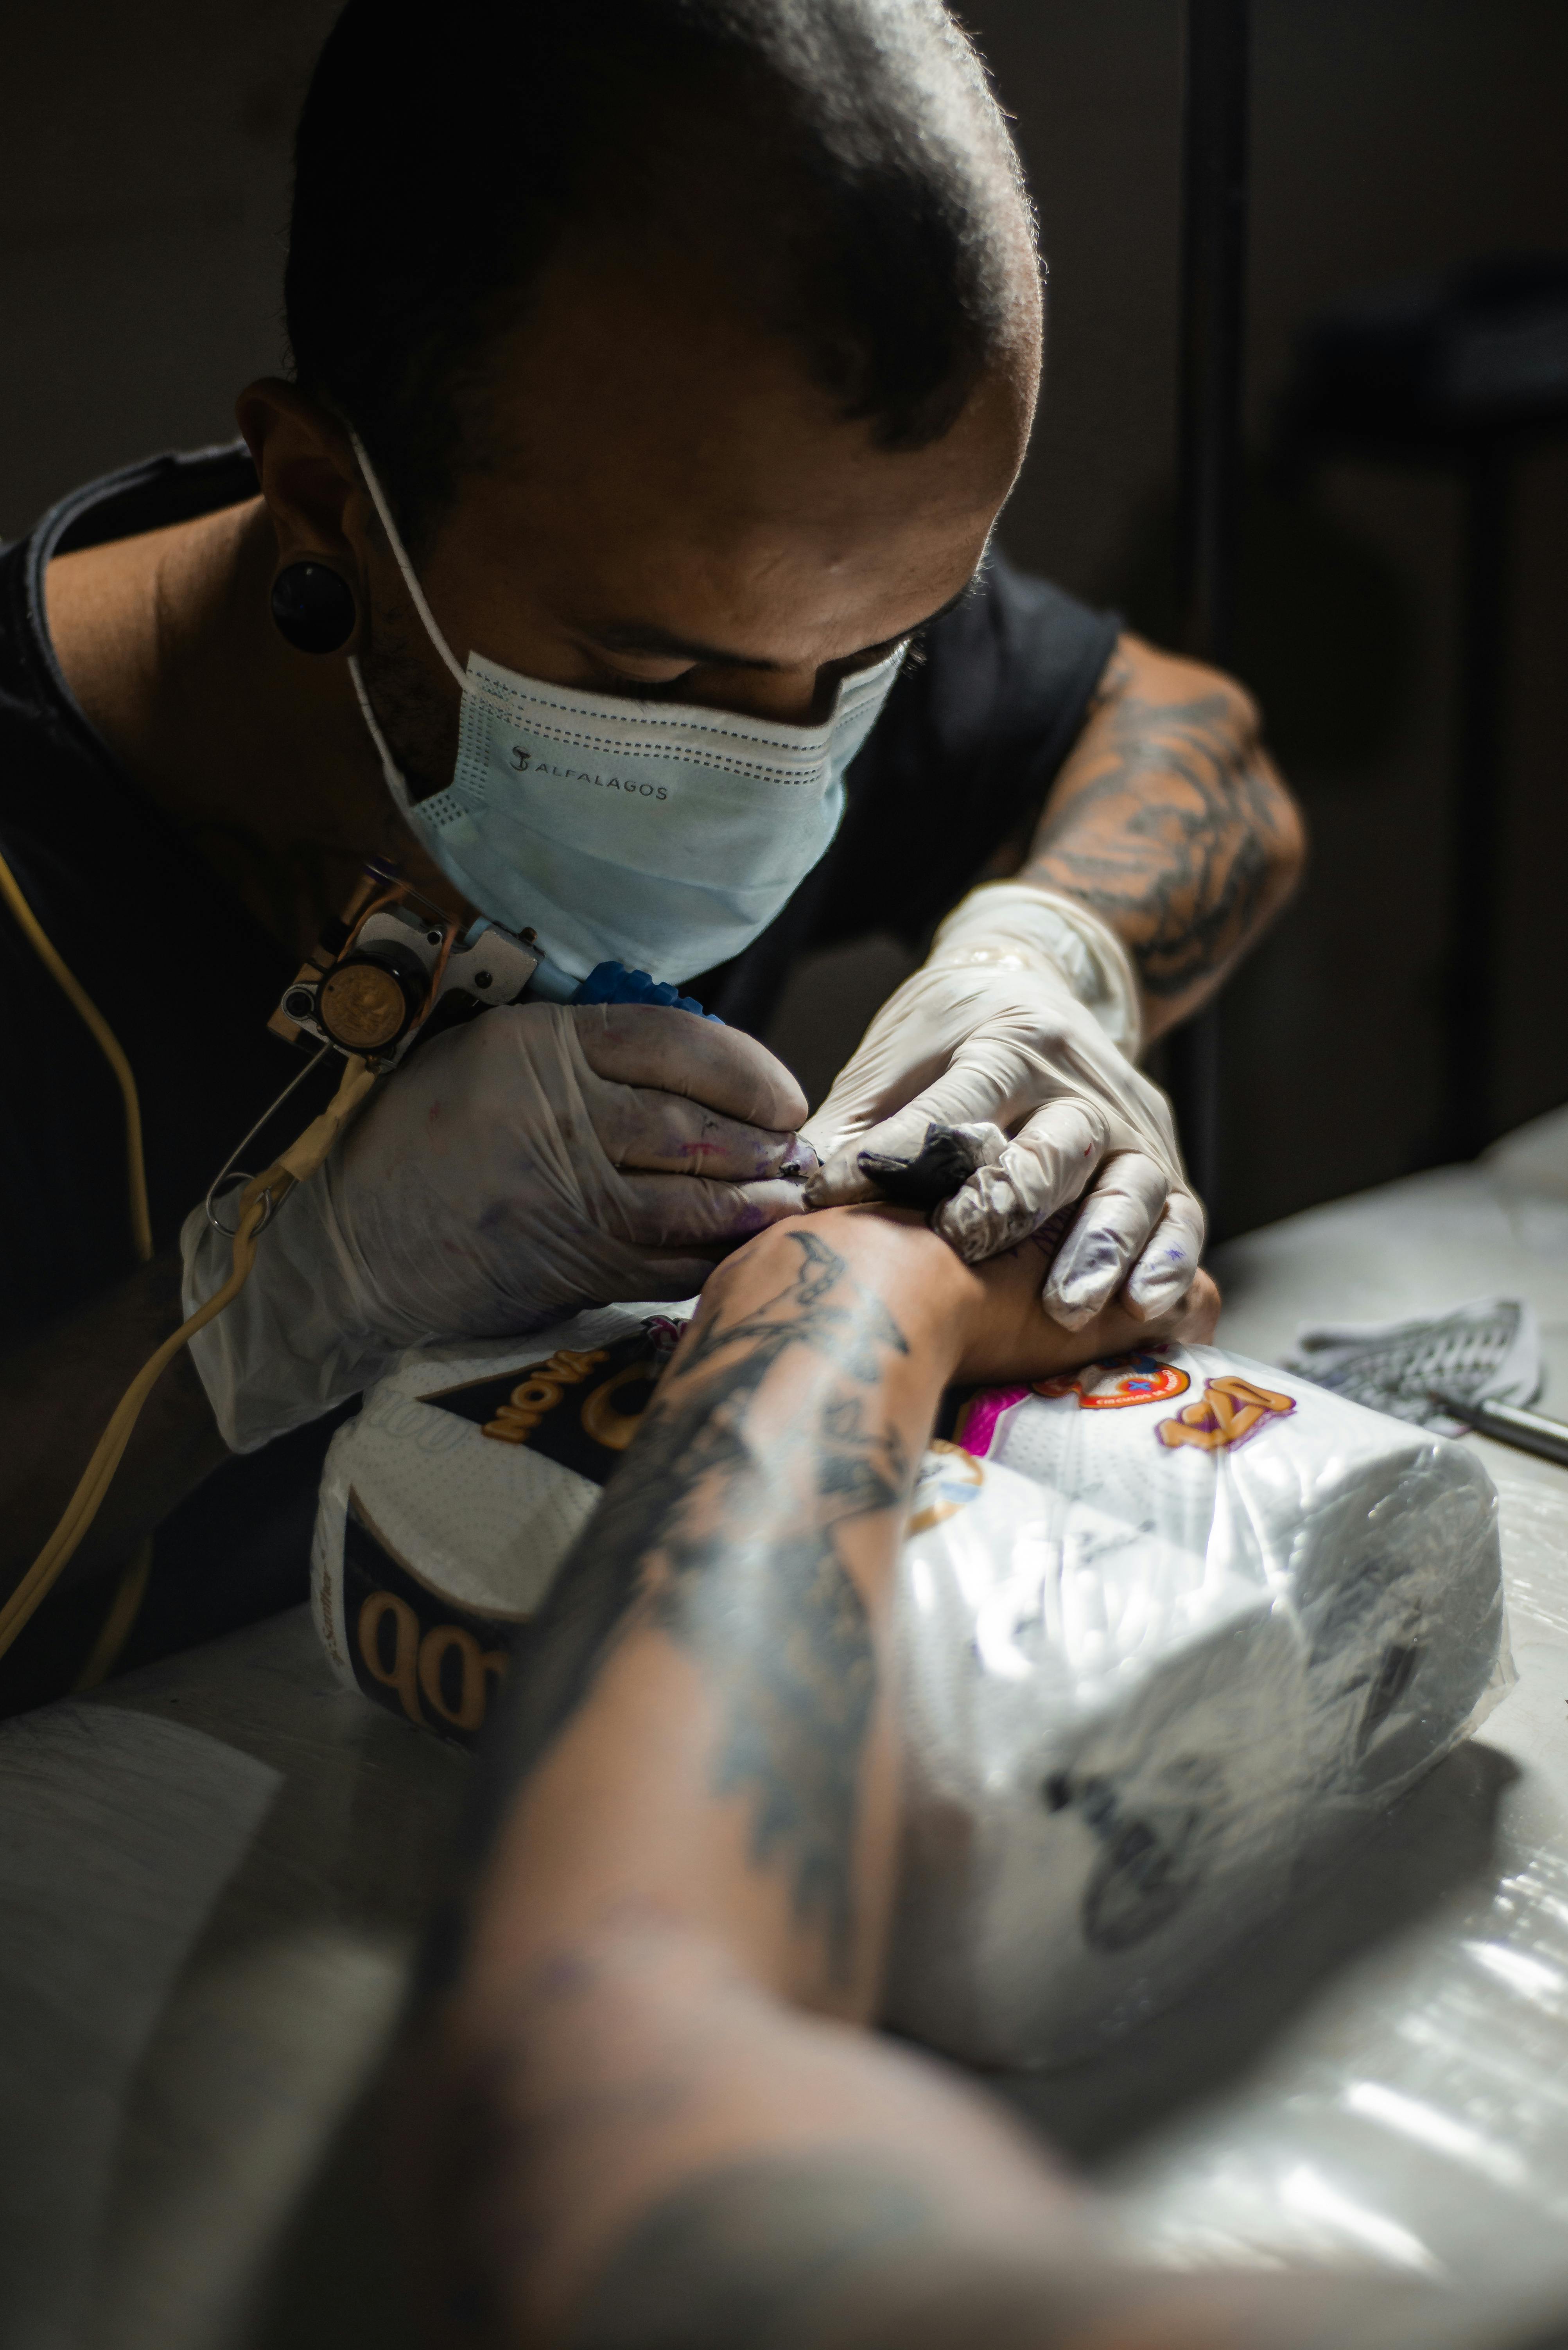 Balinese Tattoos - Symbols, Designs, Pictures ⋆ TATTLAS Bali Tattoo Guide ⋆